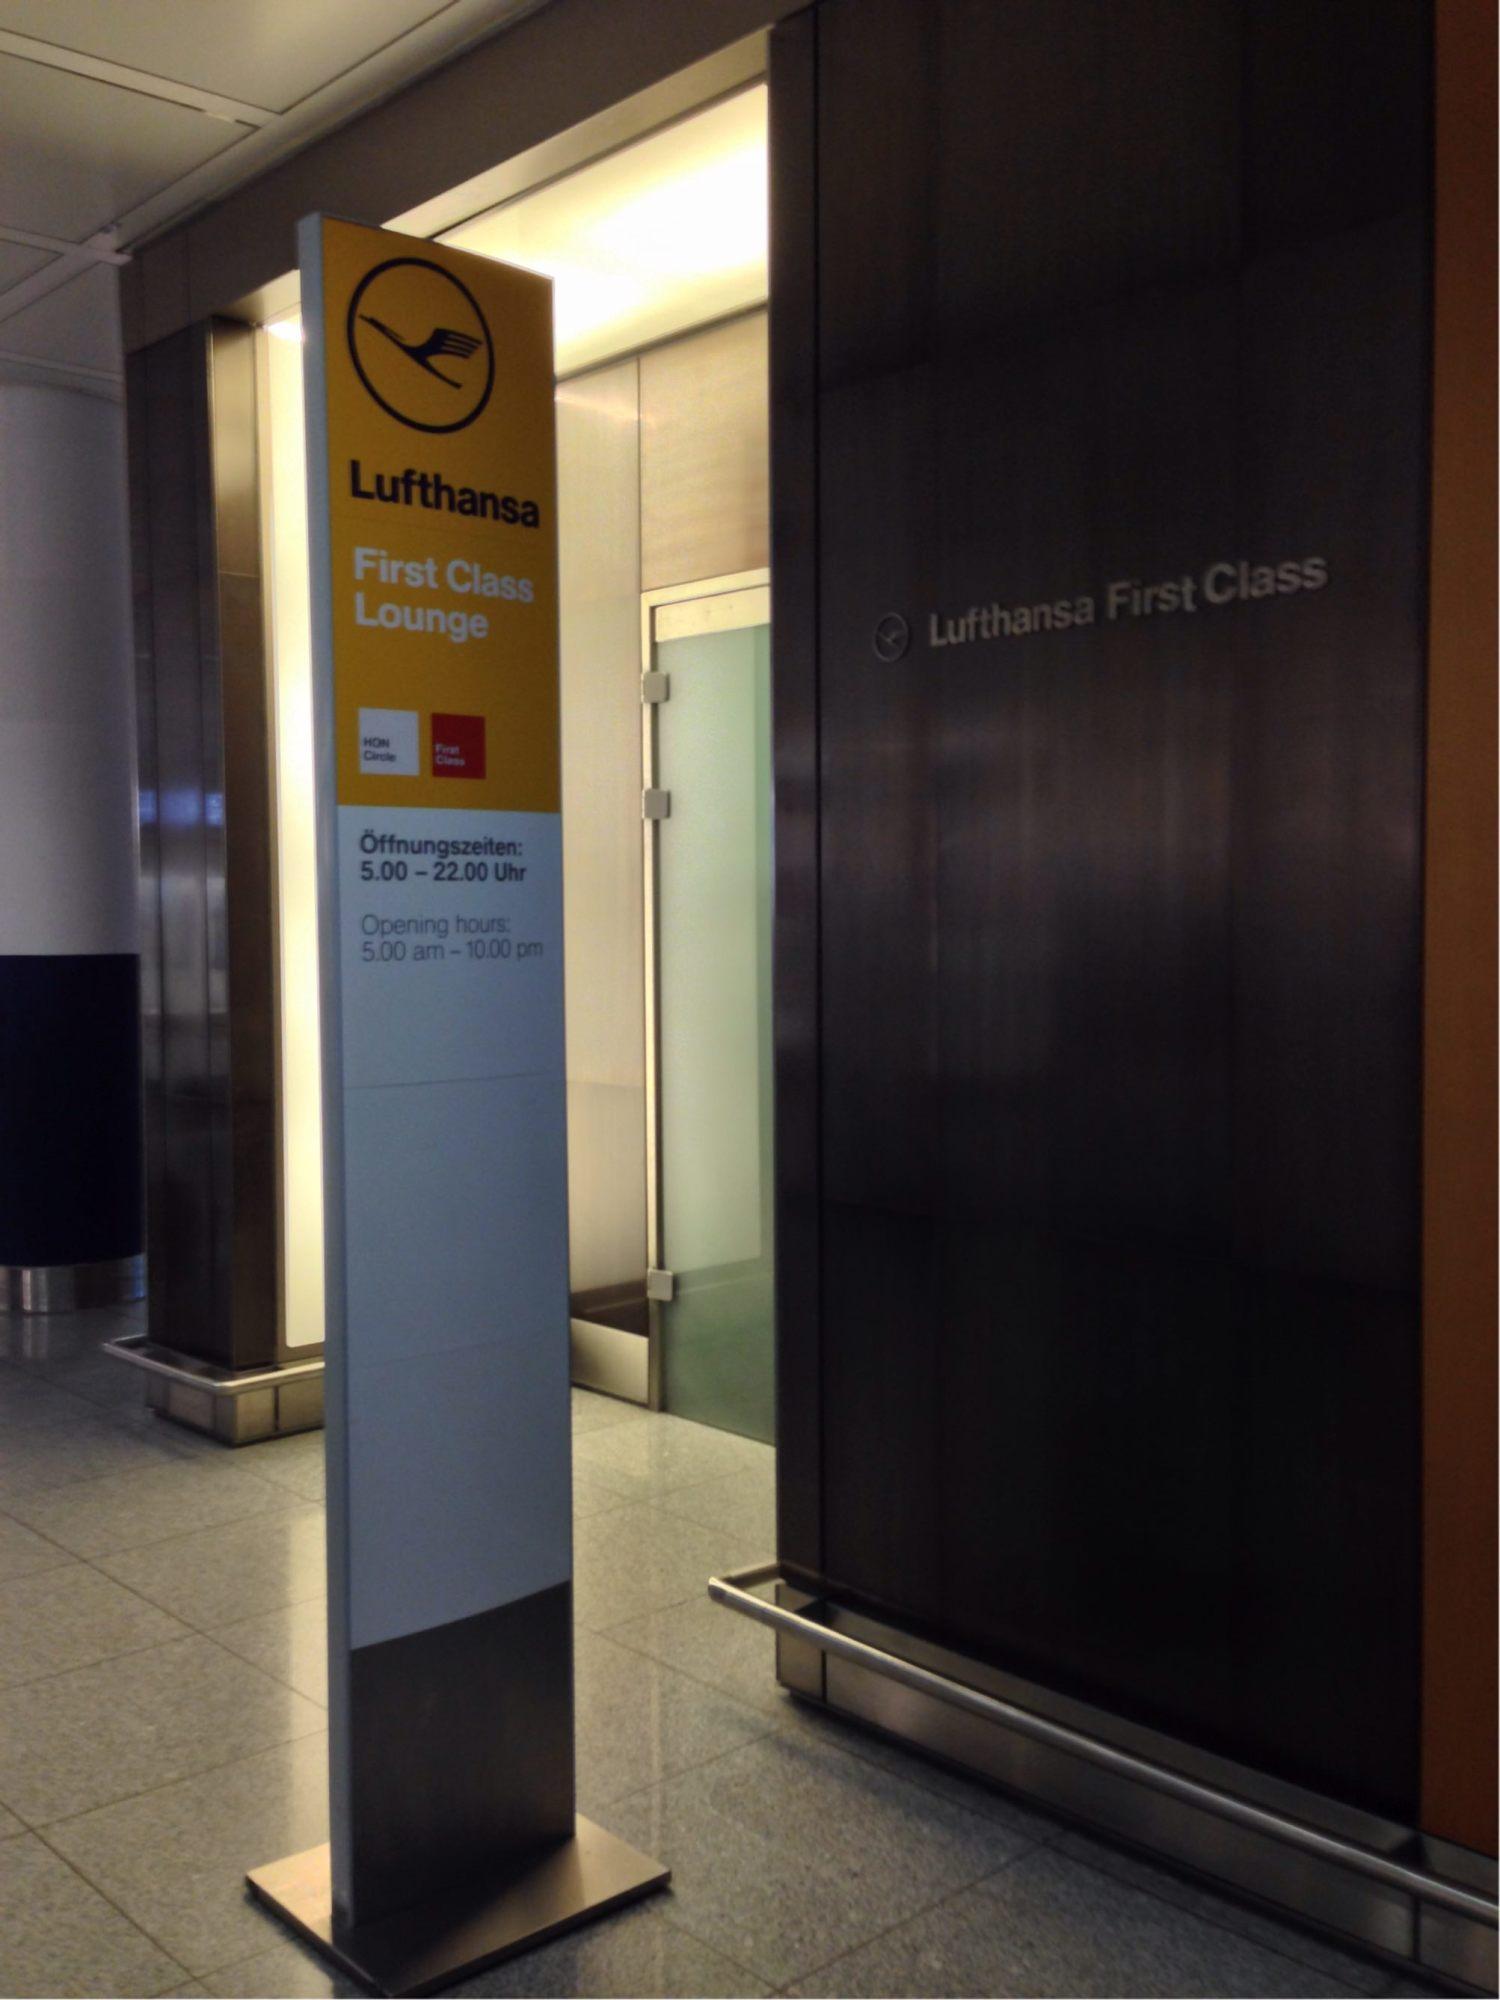 Lufthansa First Class Lounge image 4 of 42